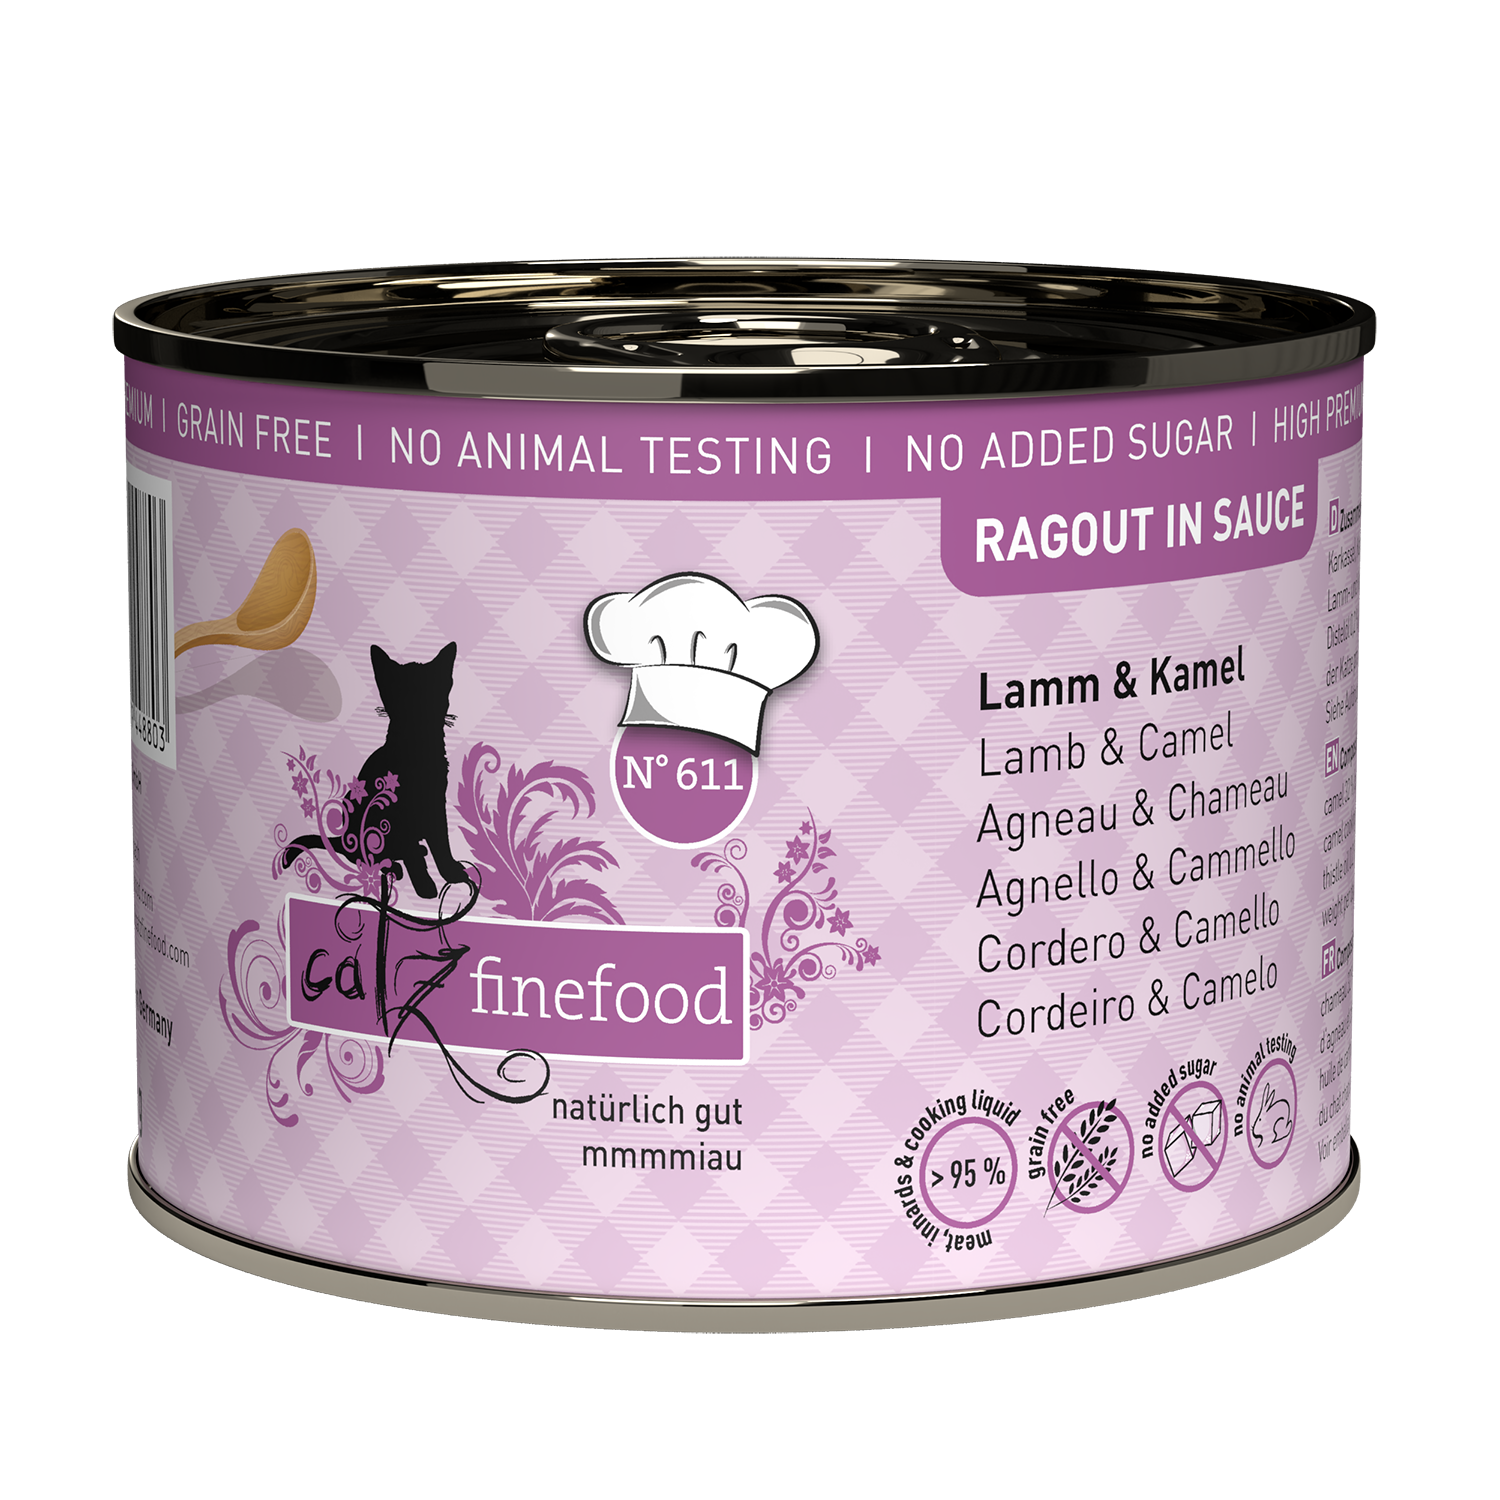 catz finefood RAGOUT IN SAUCE N° 611 Lamm & Kamel 190g